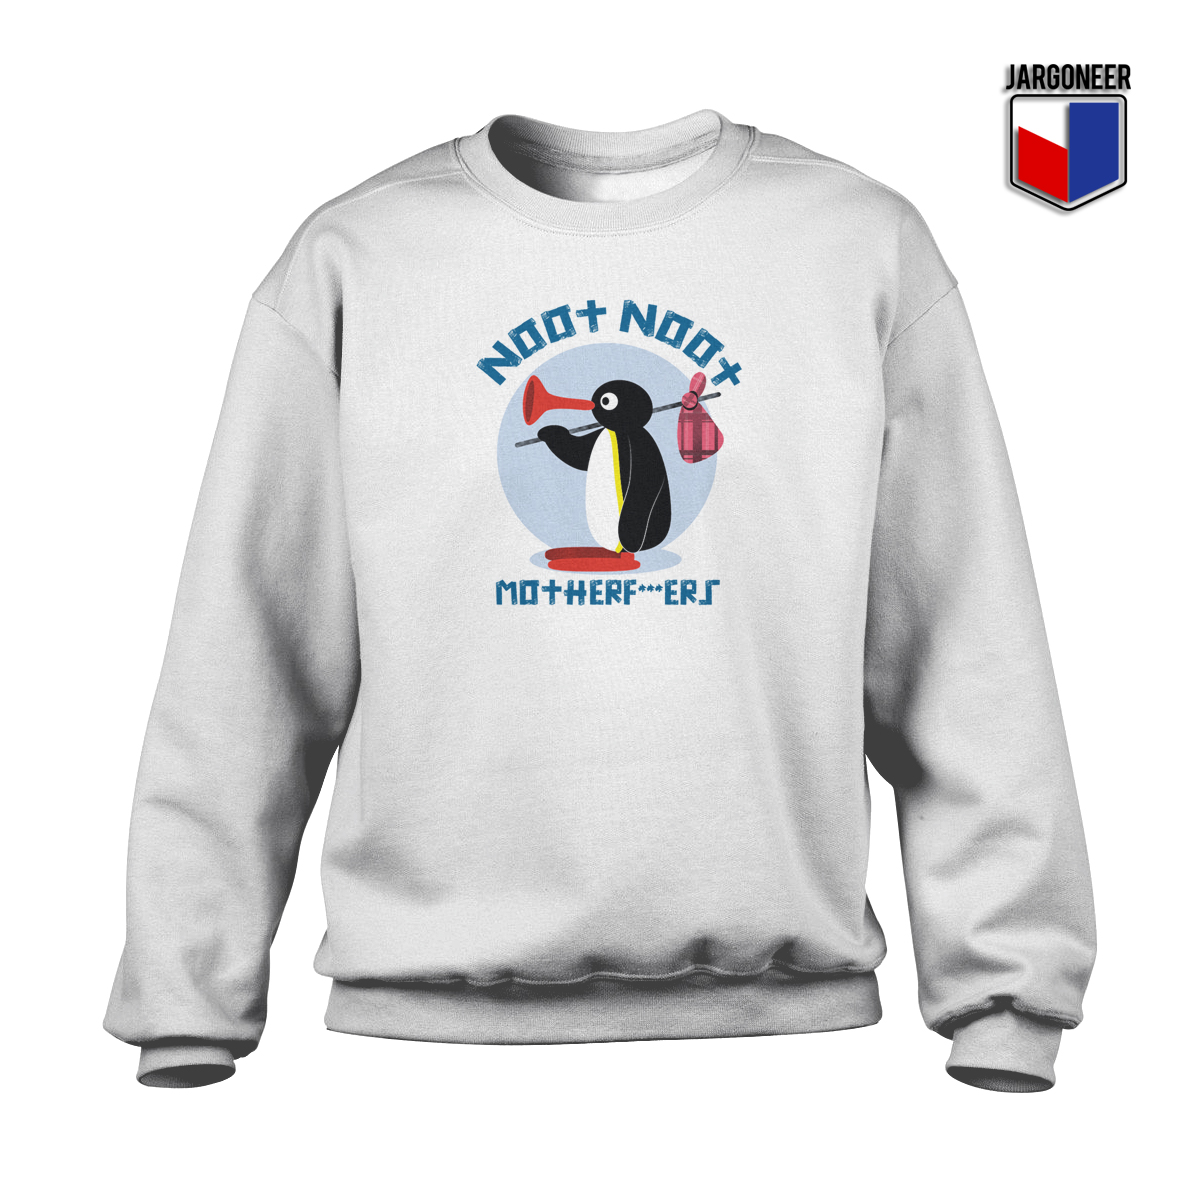 Noot Noot Penguin Crewneck Sweatshirt - Shop Unique Graphic Cool Shirt Designs